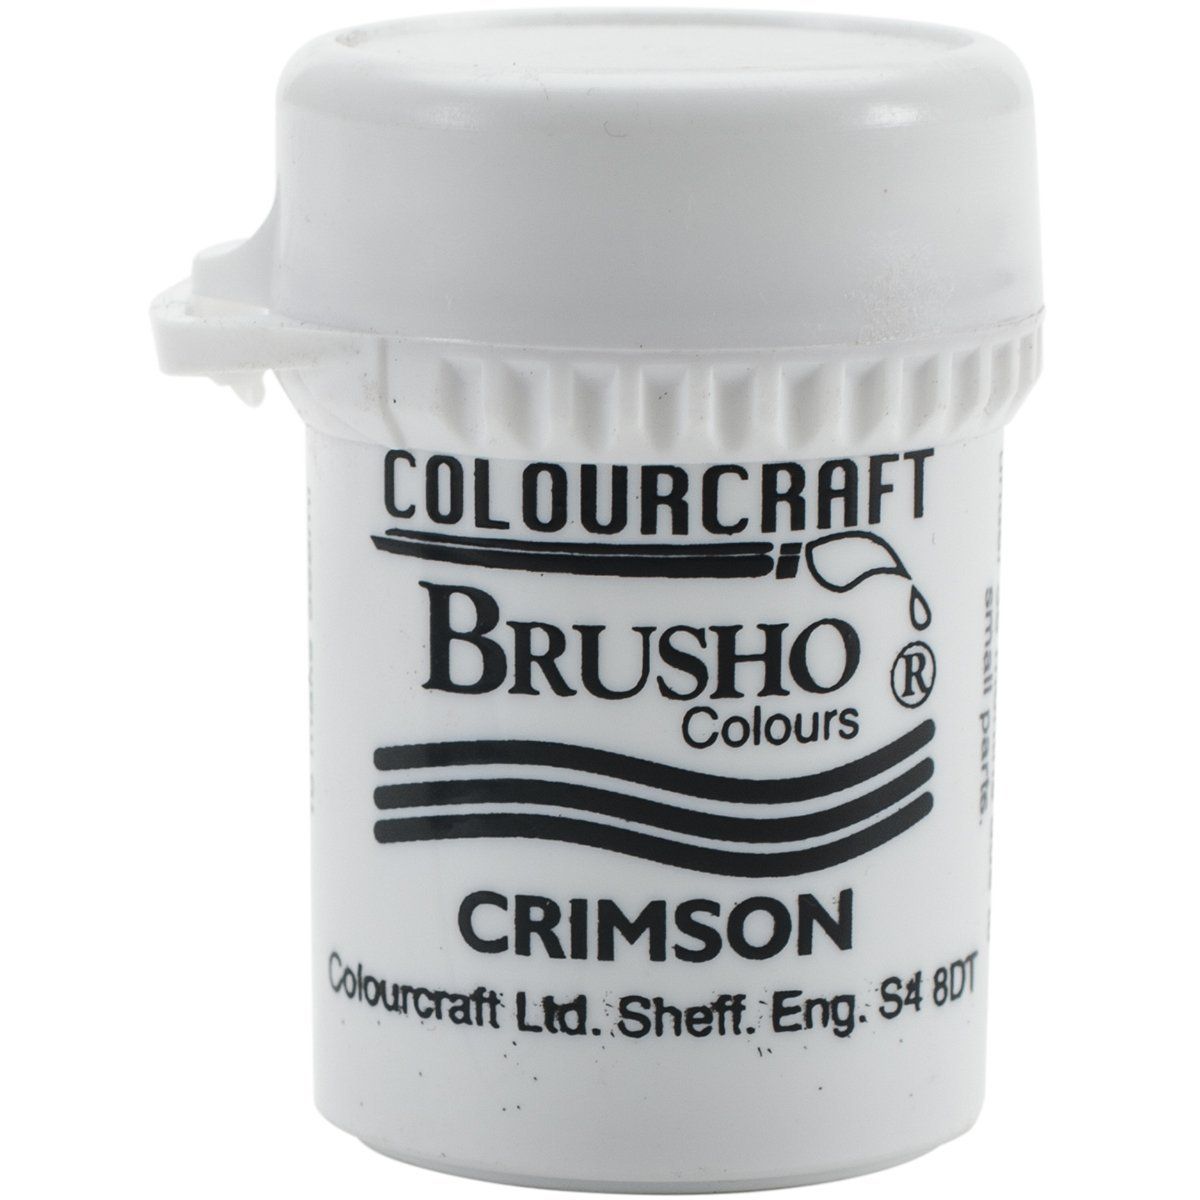 Brusho Crystal Colour - Crimson 15 gm